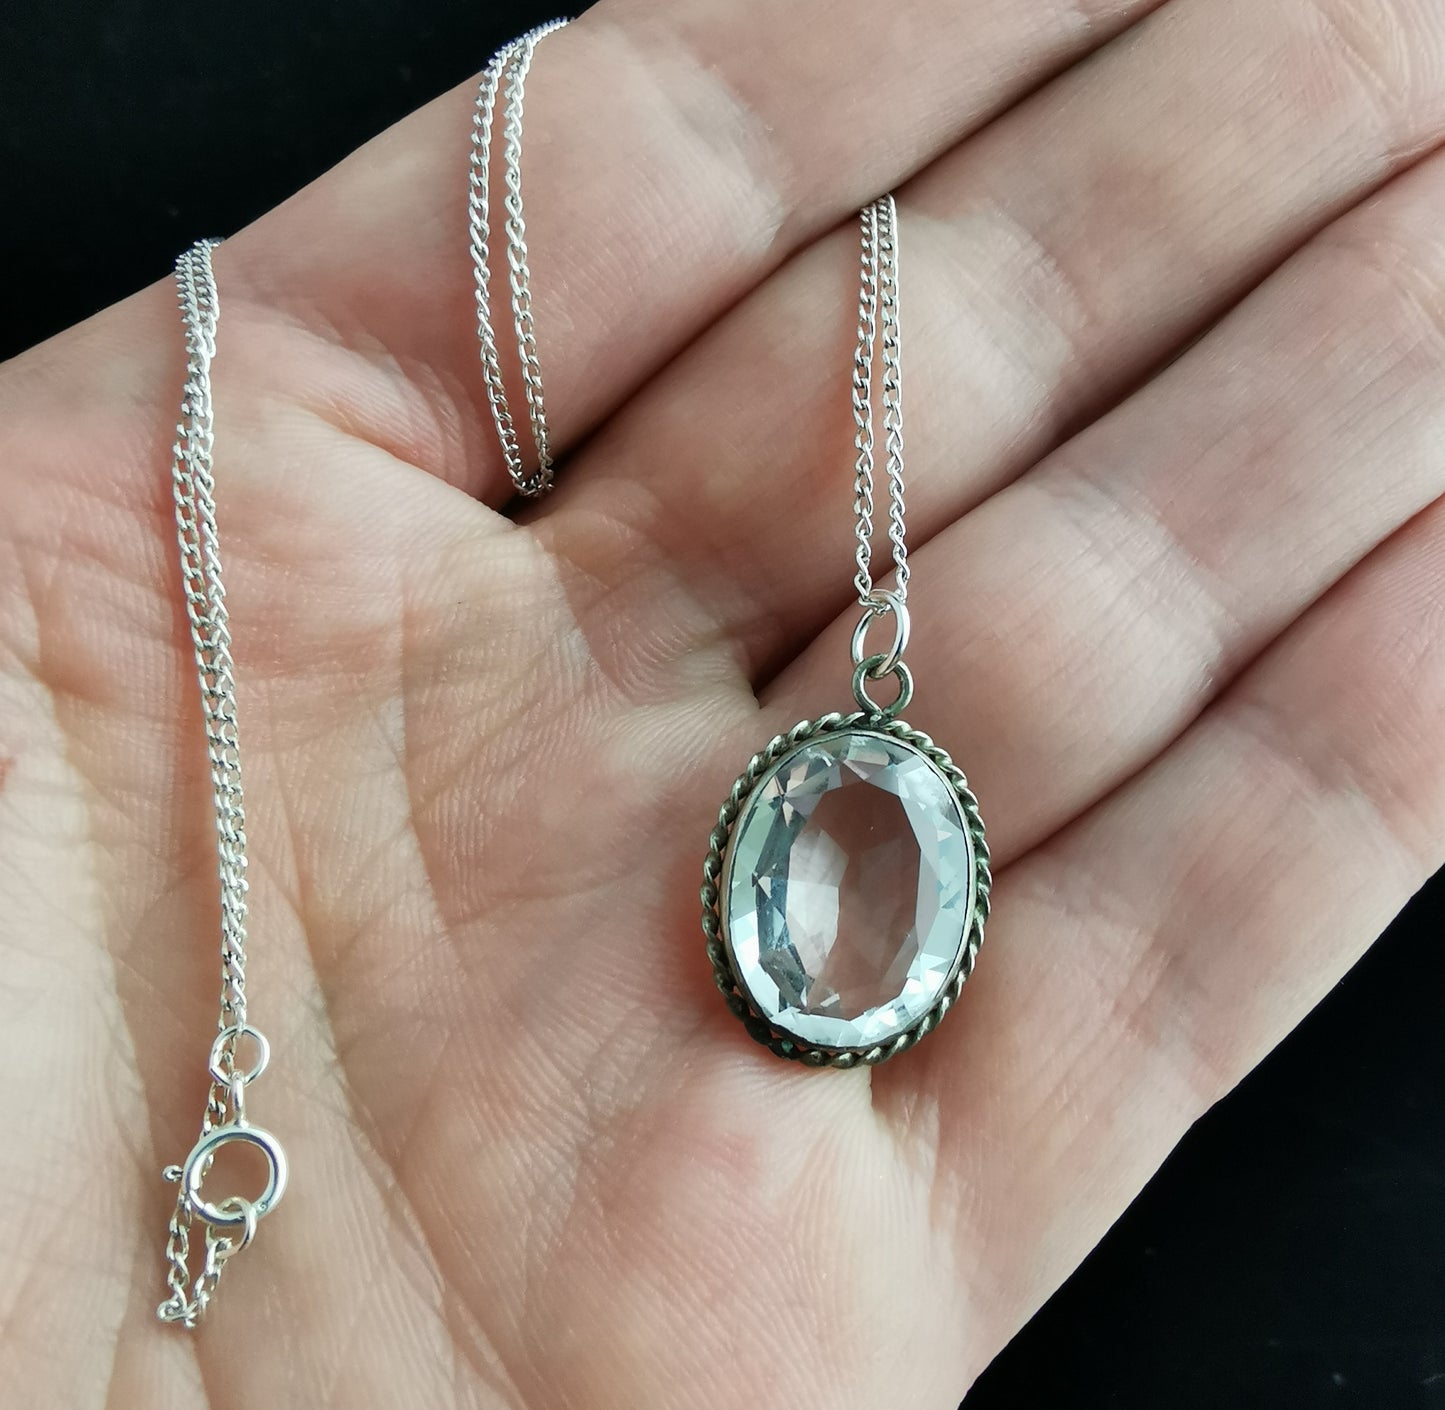 Victorian Rock crystal pendant, silver necklace